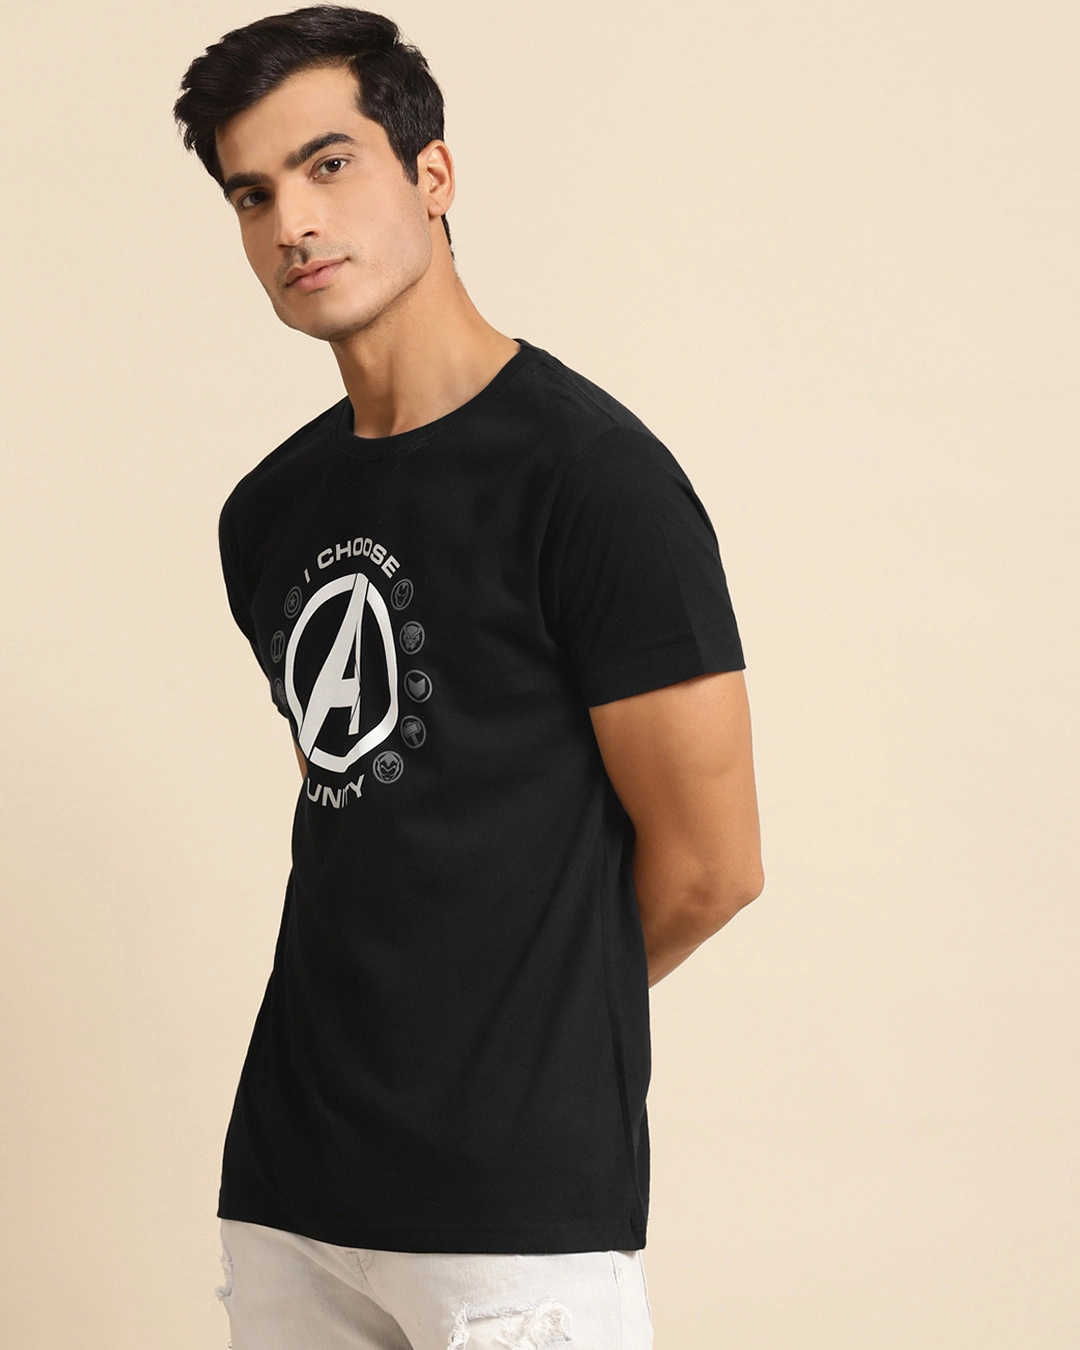 Shop Men's Black I Choose Unity (AVL) Typography T-shirt-Back